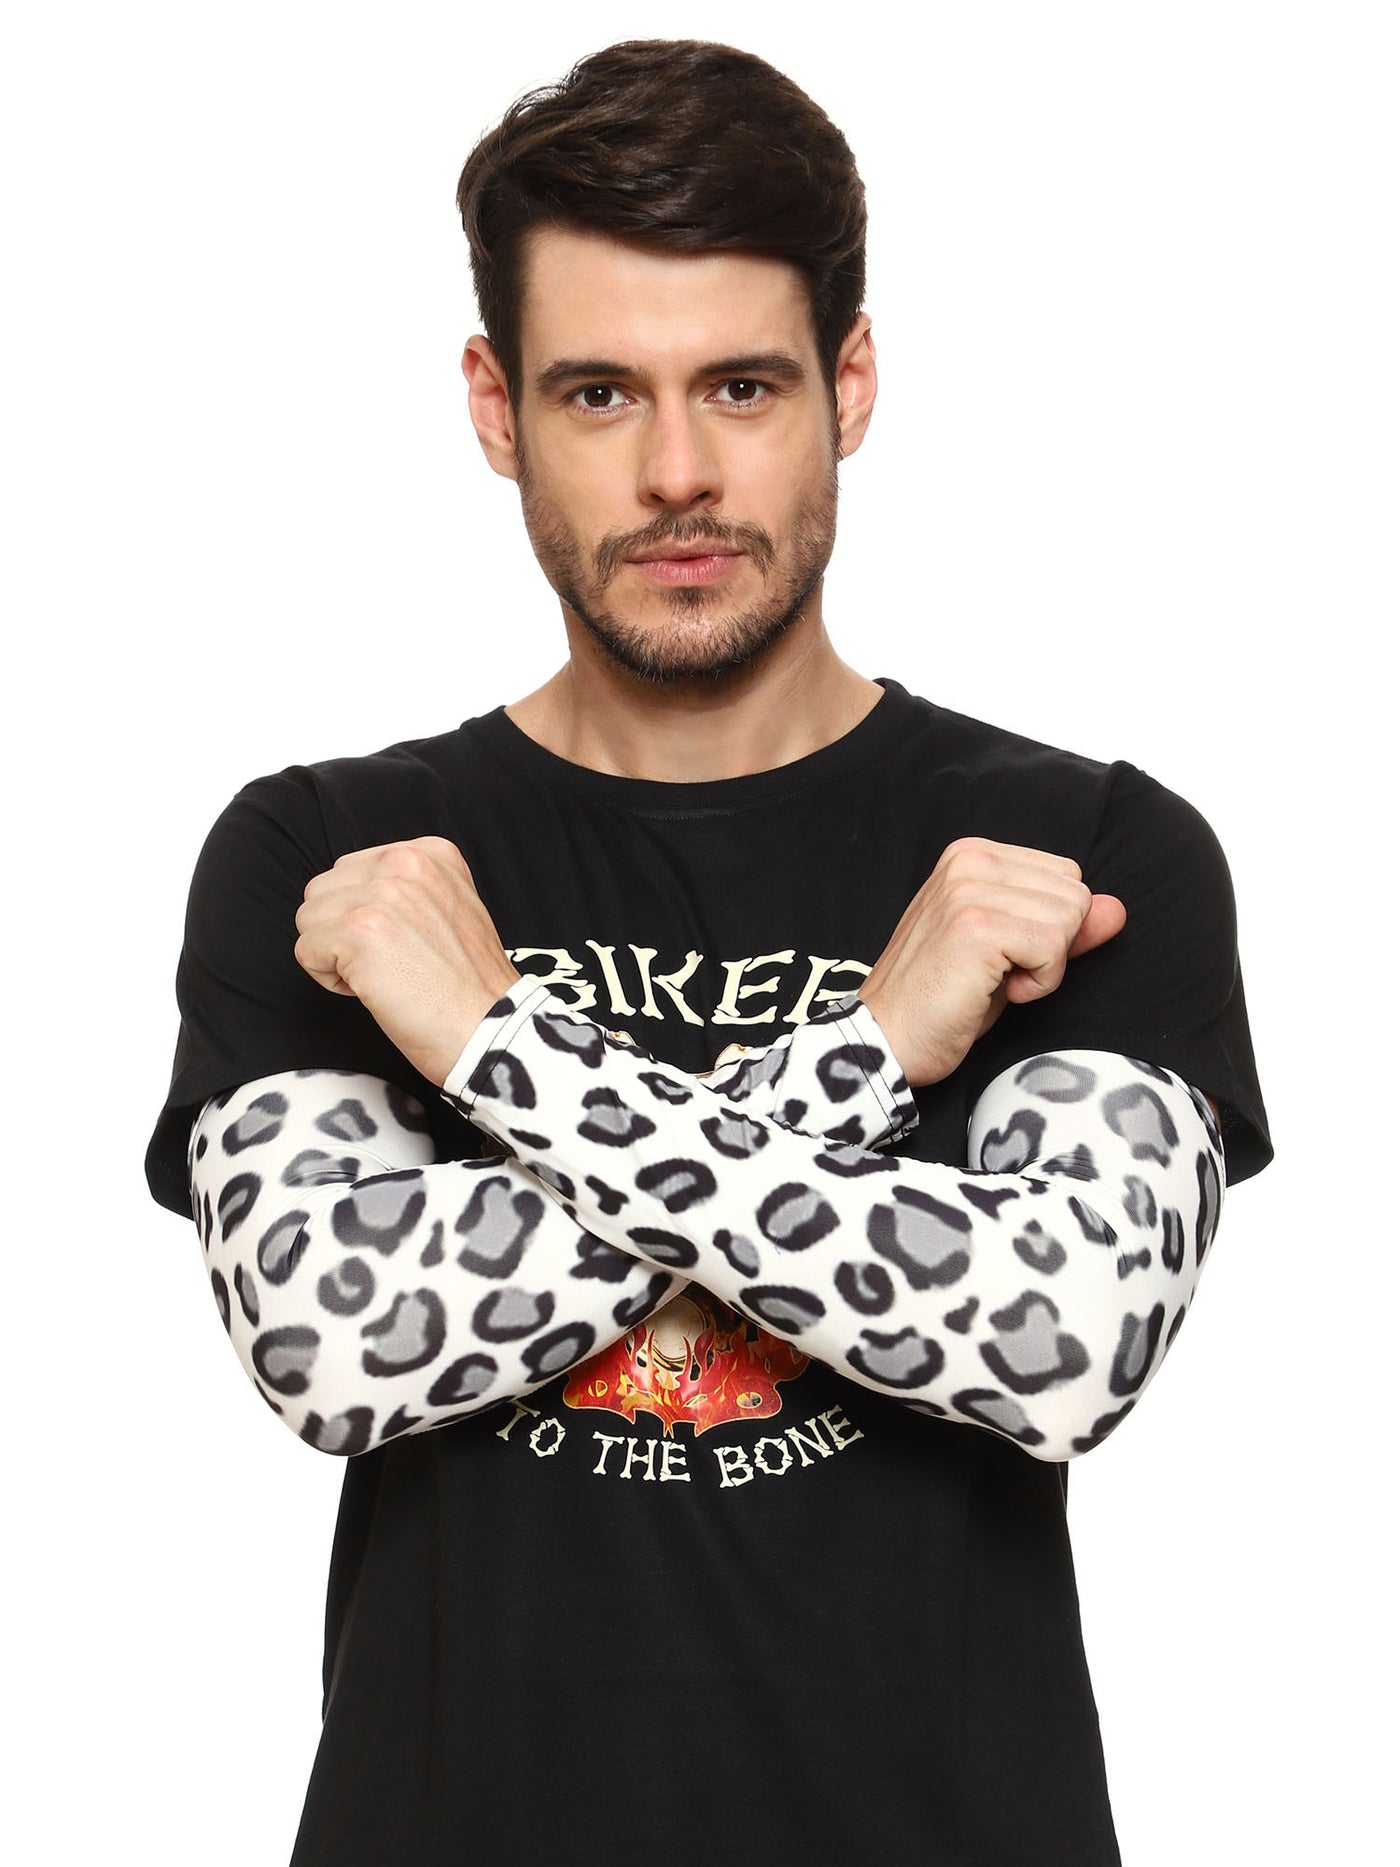 Best selling Biker Arm Sleeves. Motohog Arm compression sleeves .Best Biker t shirts,bandanas,neck gaiters,embroidered patches online India